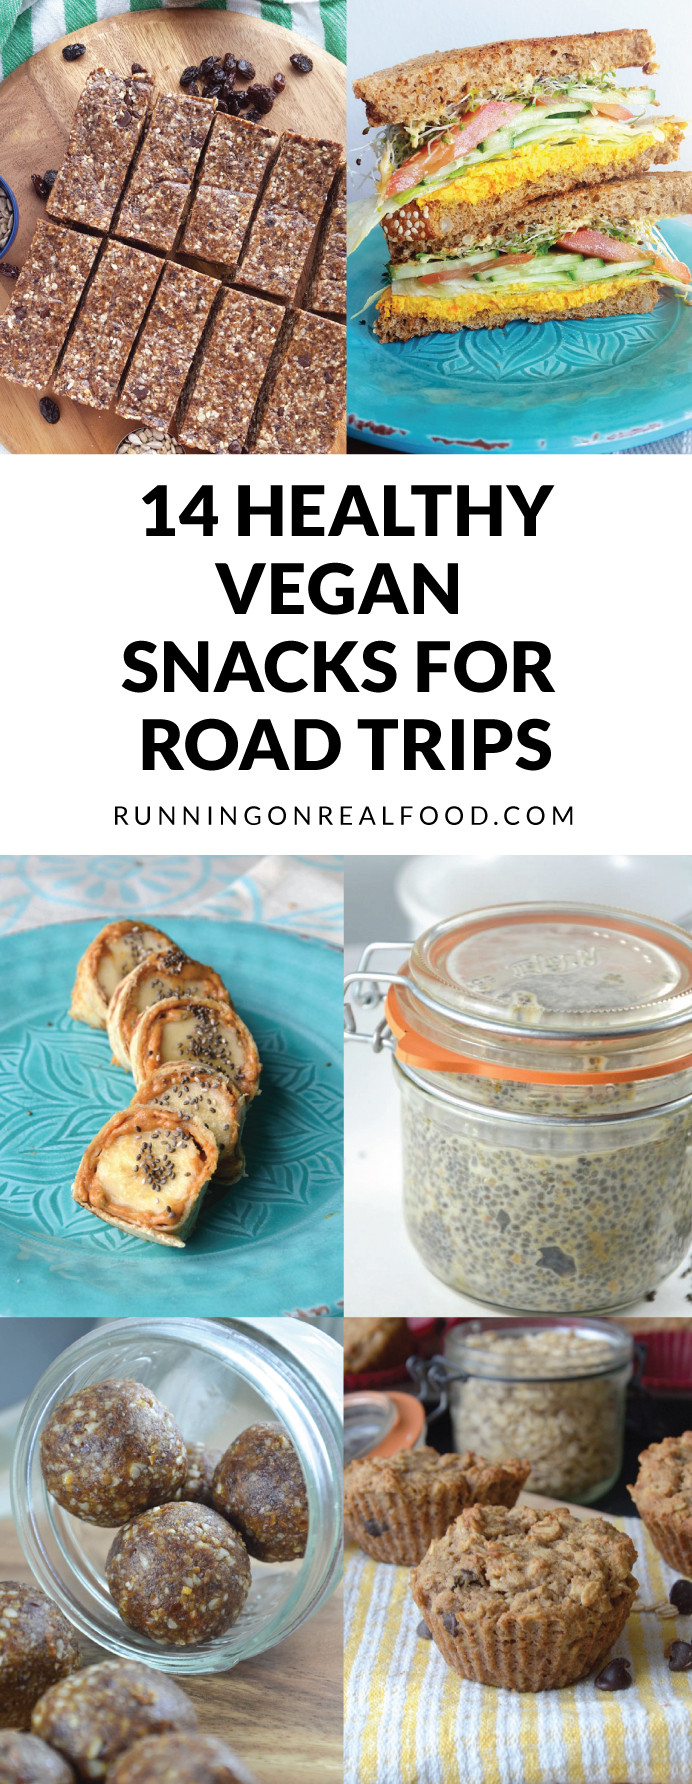 Healthy Vegan Snacks To Buy
 Healthy Vegan Snacks for Road Trips or Anytime